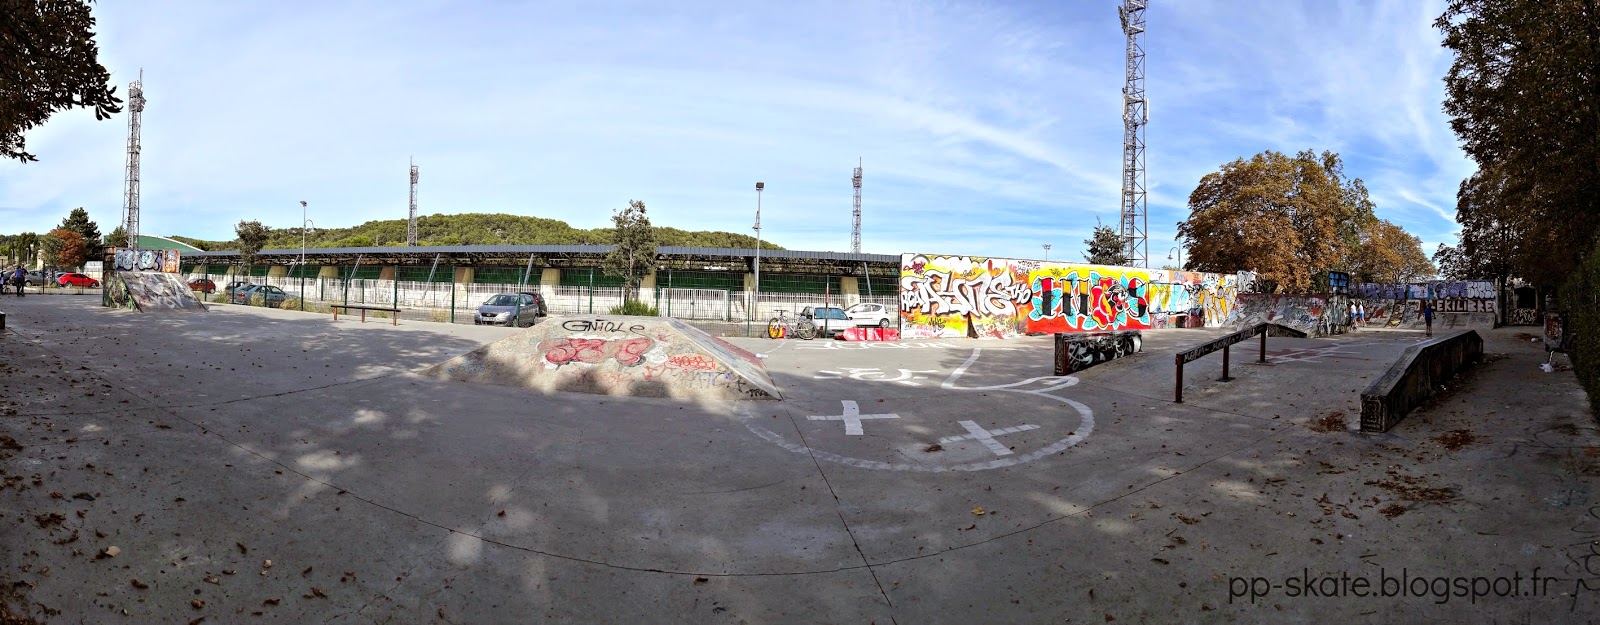 Skatepark Aix en provence